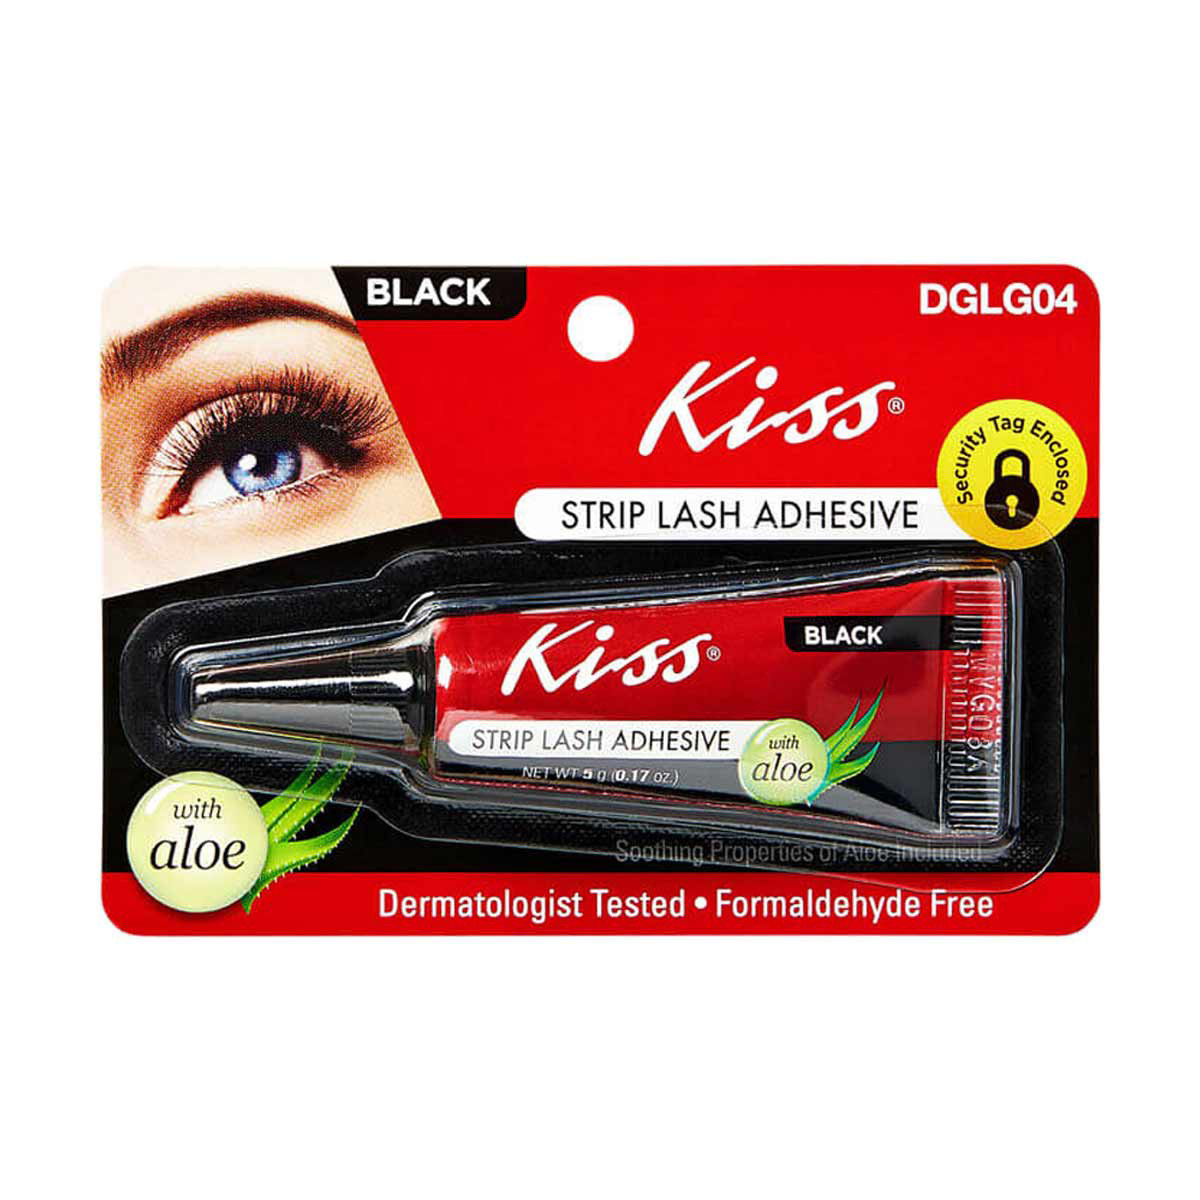 Kiss Strip Lash Adhesive with Aloe, Black, 0.17 oz